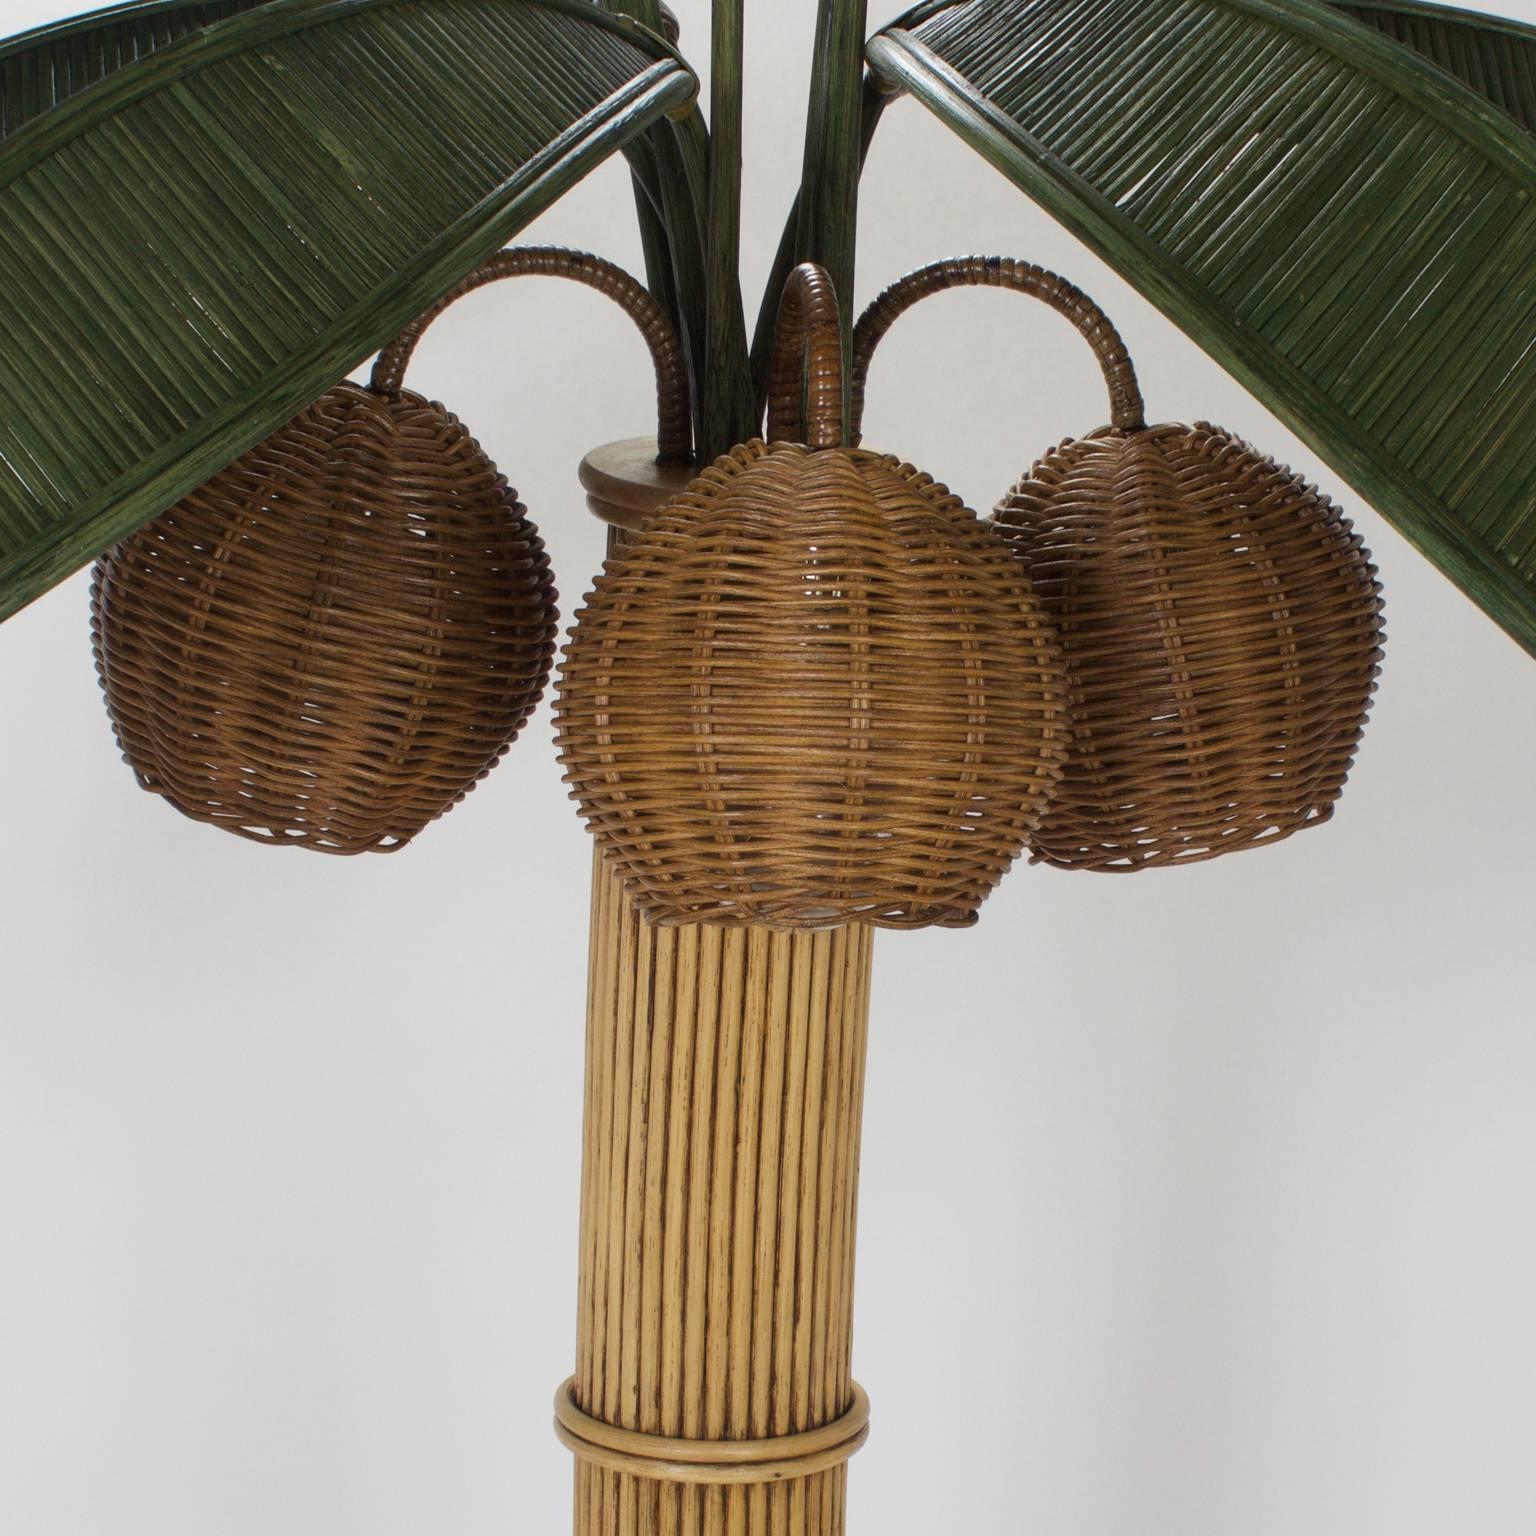 stylized palm trees